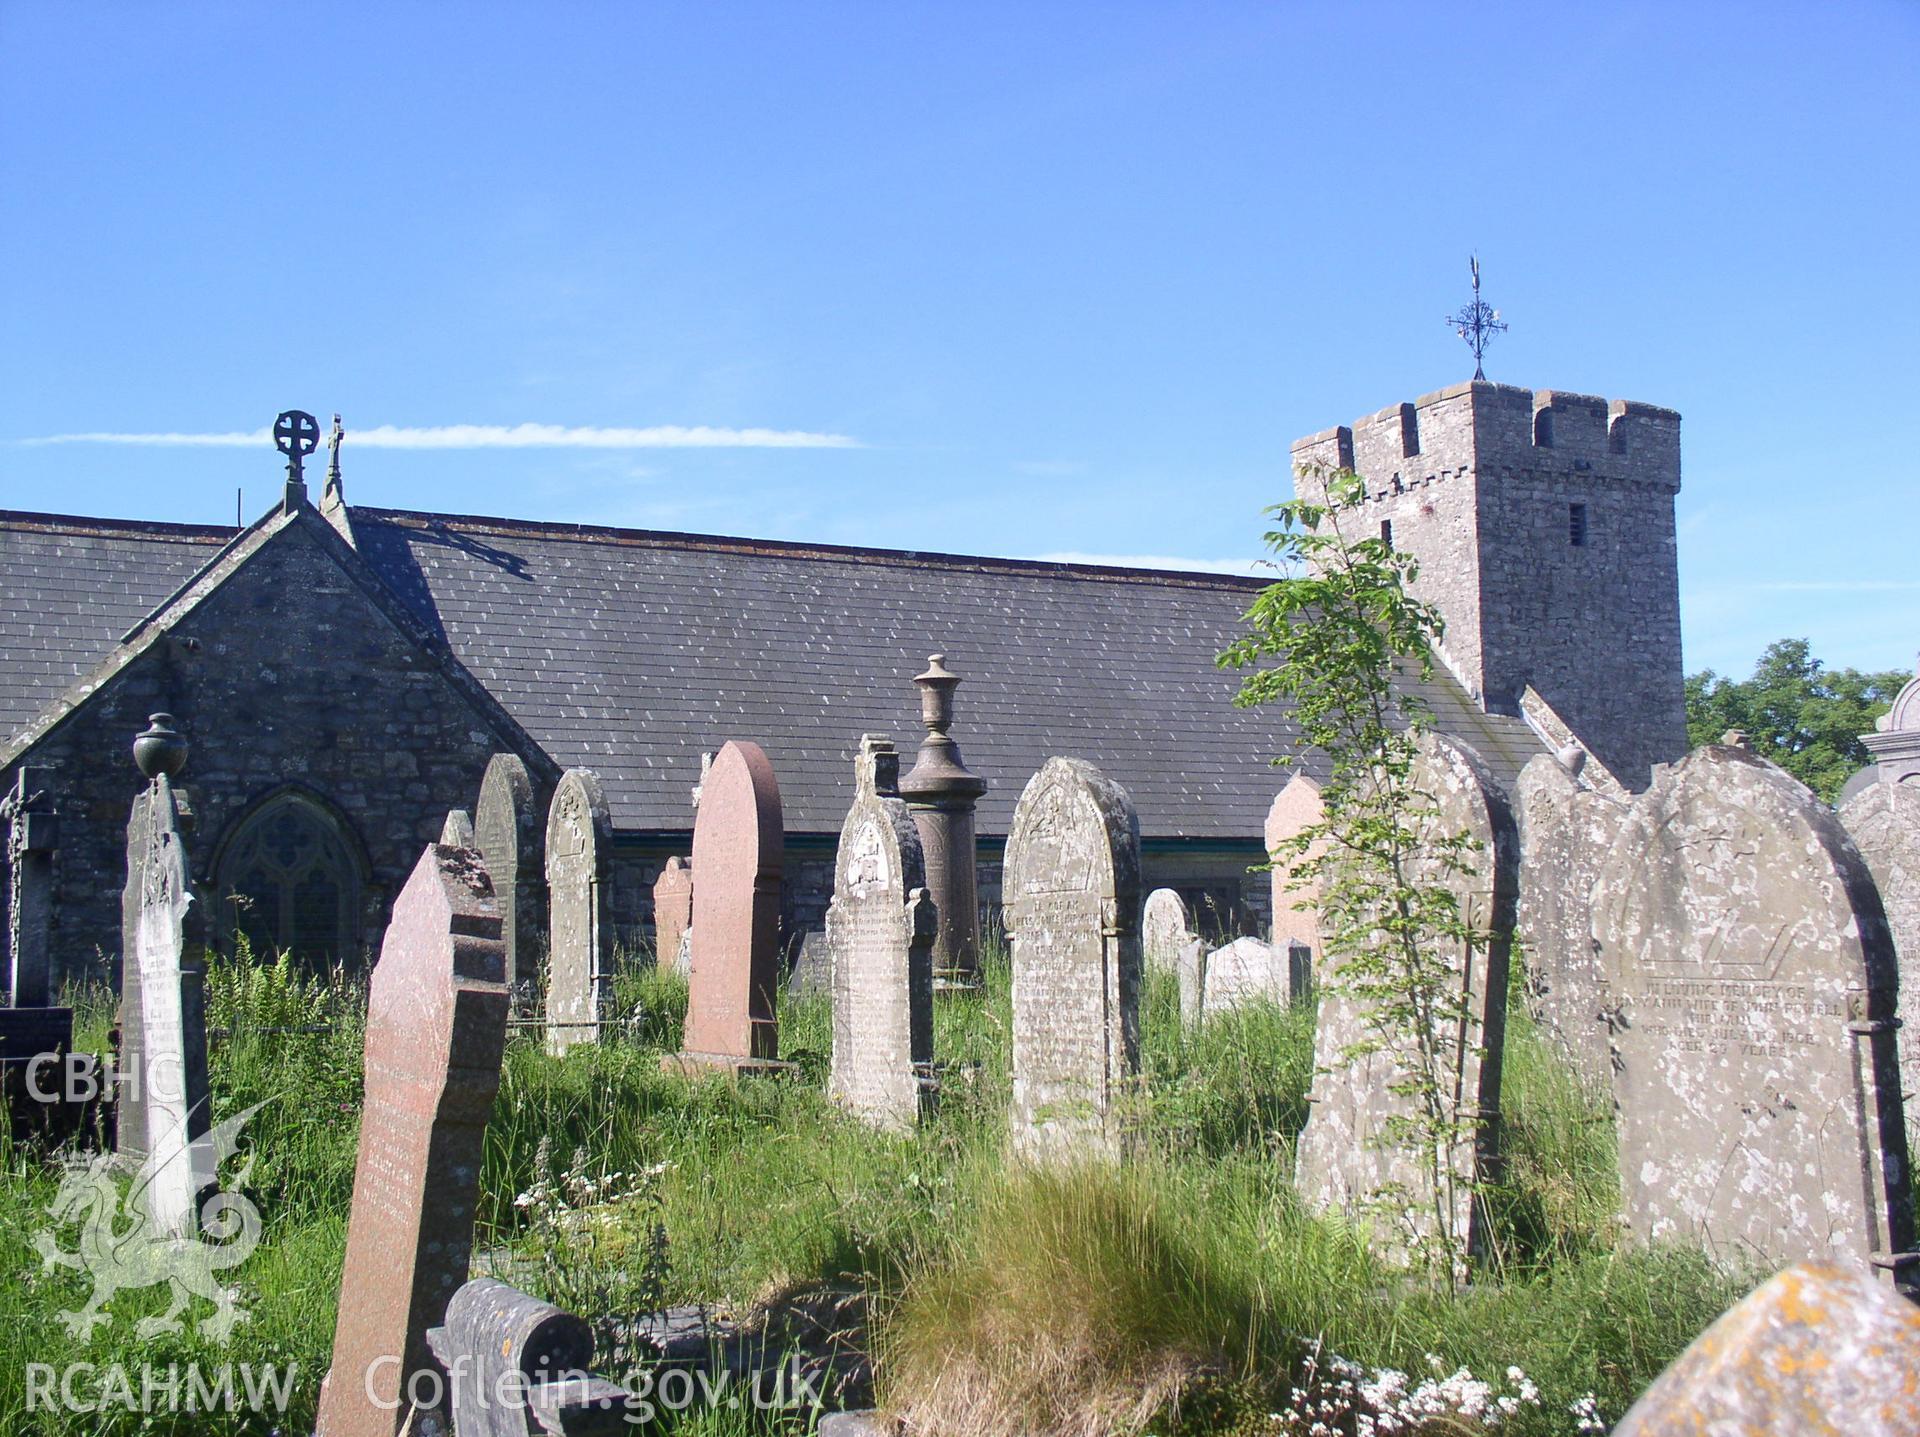 Colour digital photograph showing the exterior of St Cynog's Church, Hirwaun; Glamorgan.